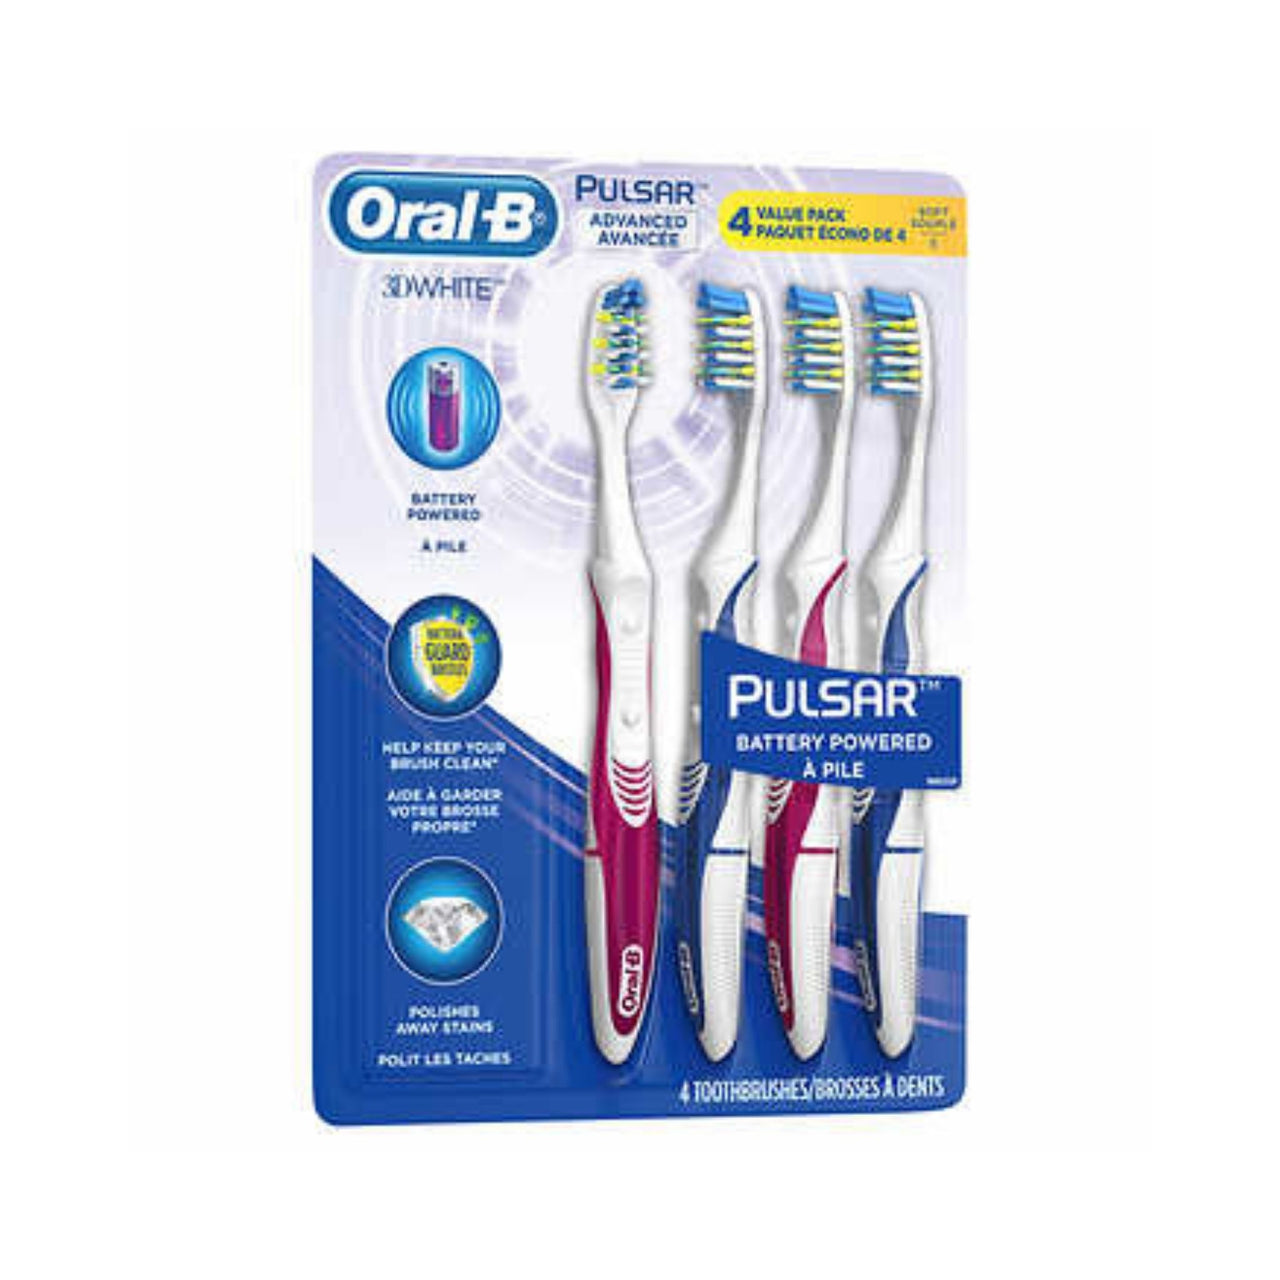 Image of Oral-B Bacteria Guard Pulsar Toothbrushes 4pk - 1 x 200 Grams